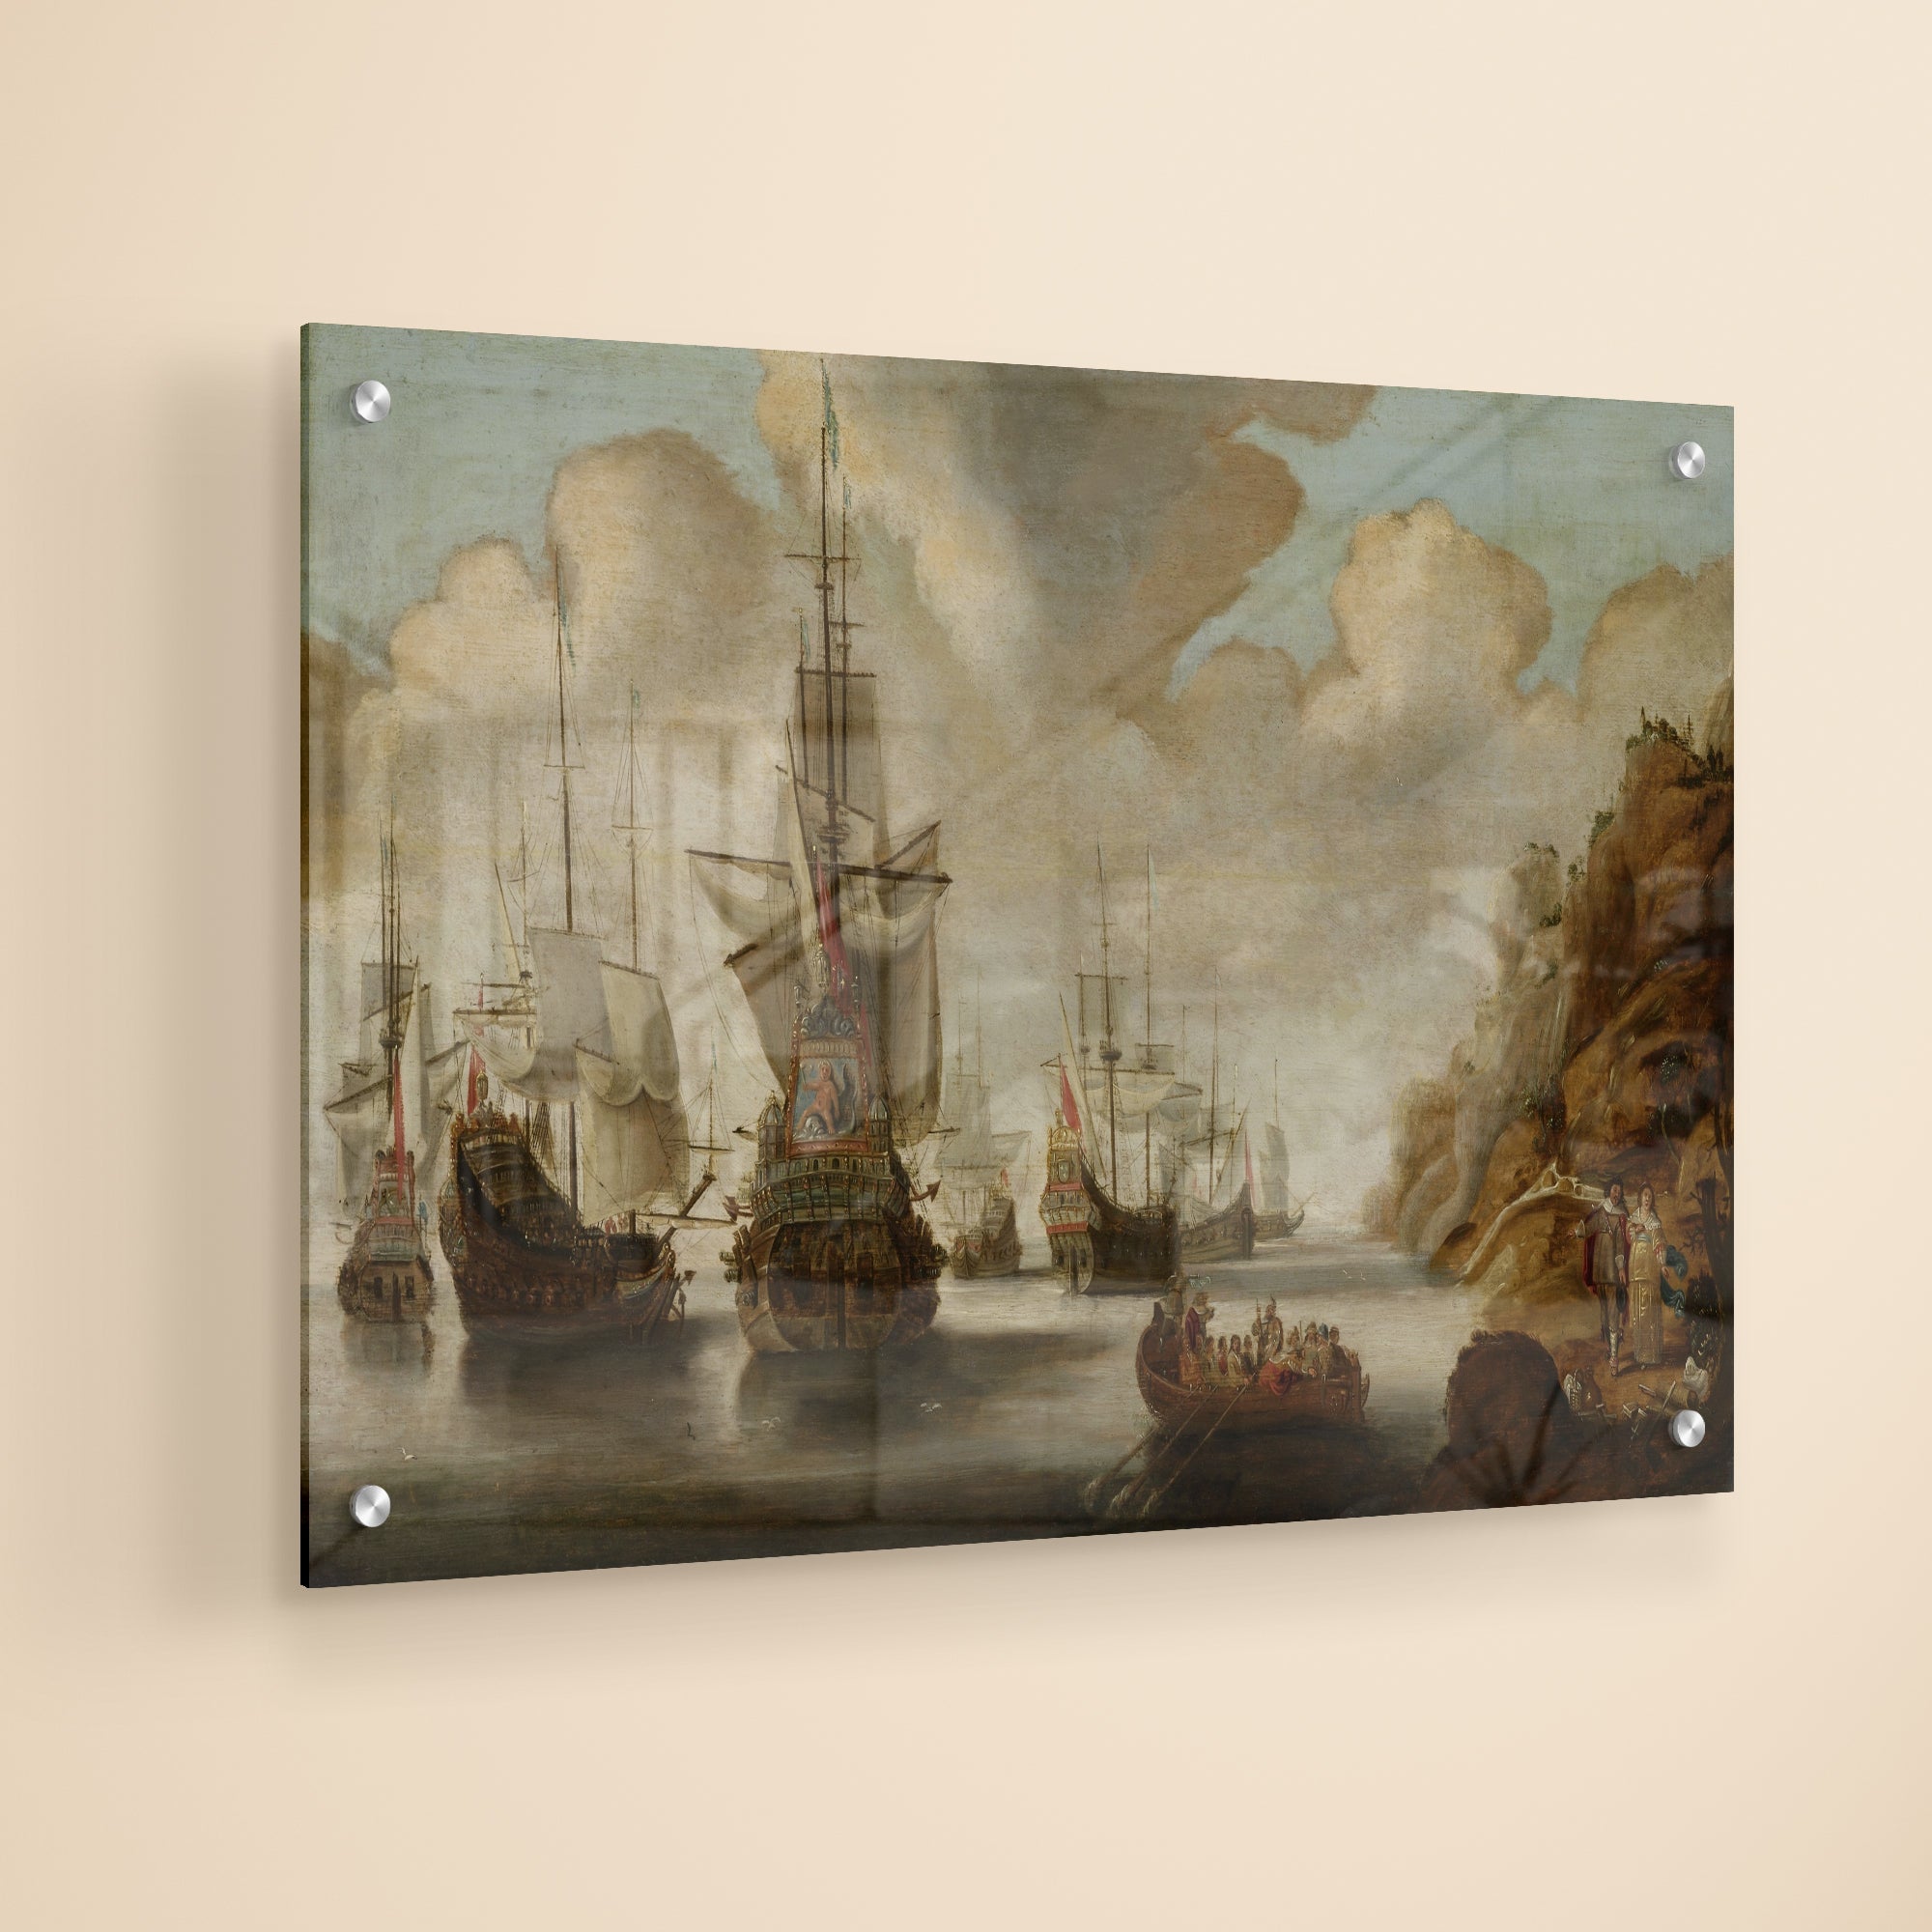 Pirate Ship Acrylic Wall Painting